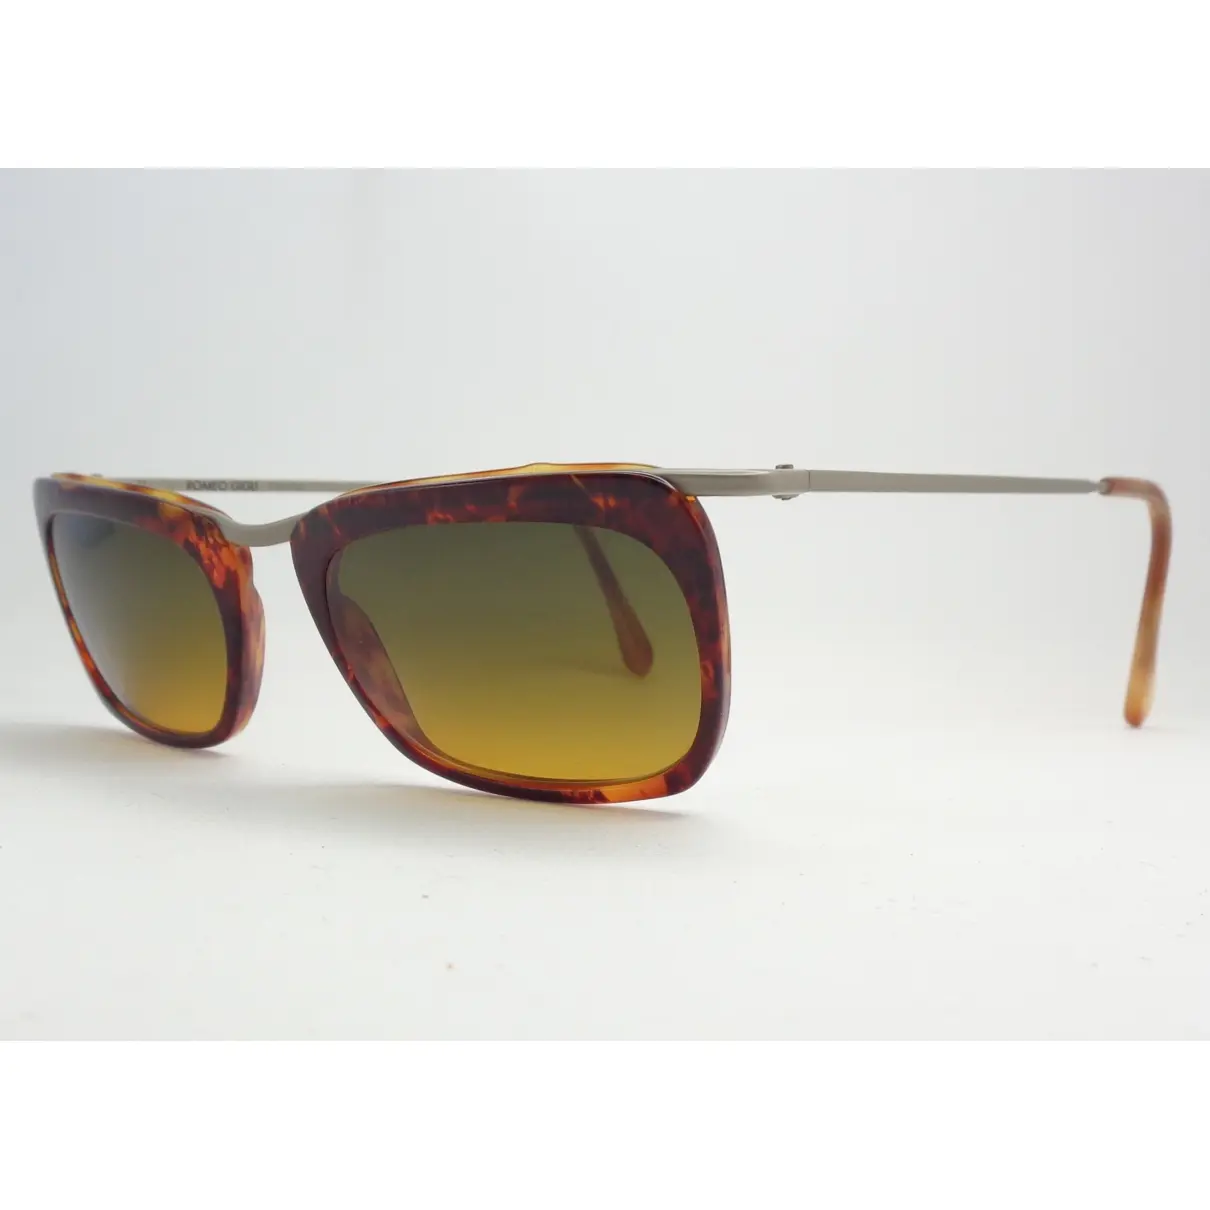 Buy Romeo Gigli Sunglasses online - Vintage